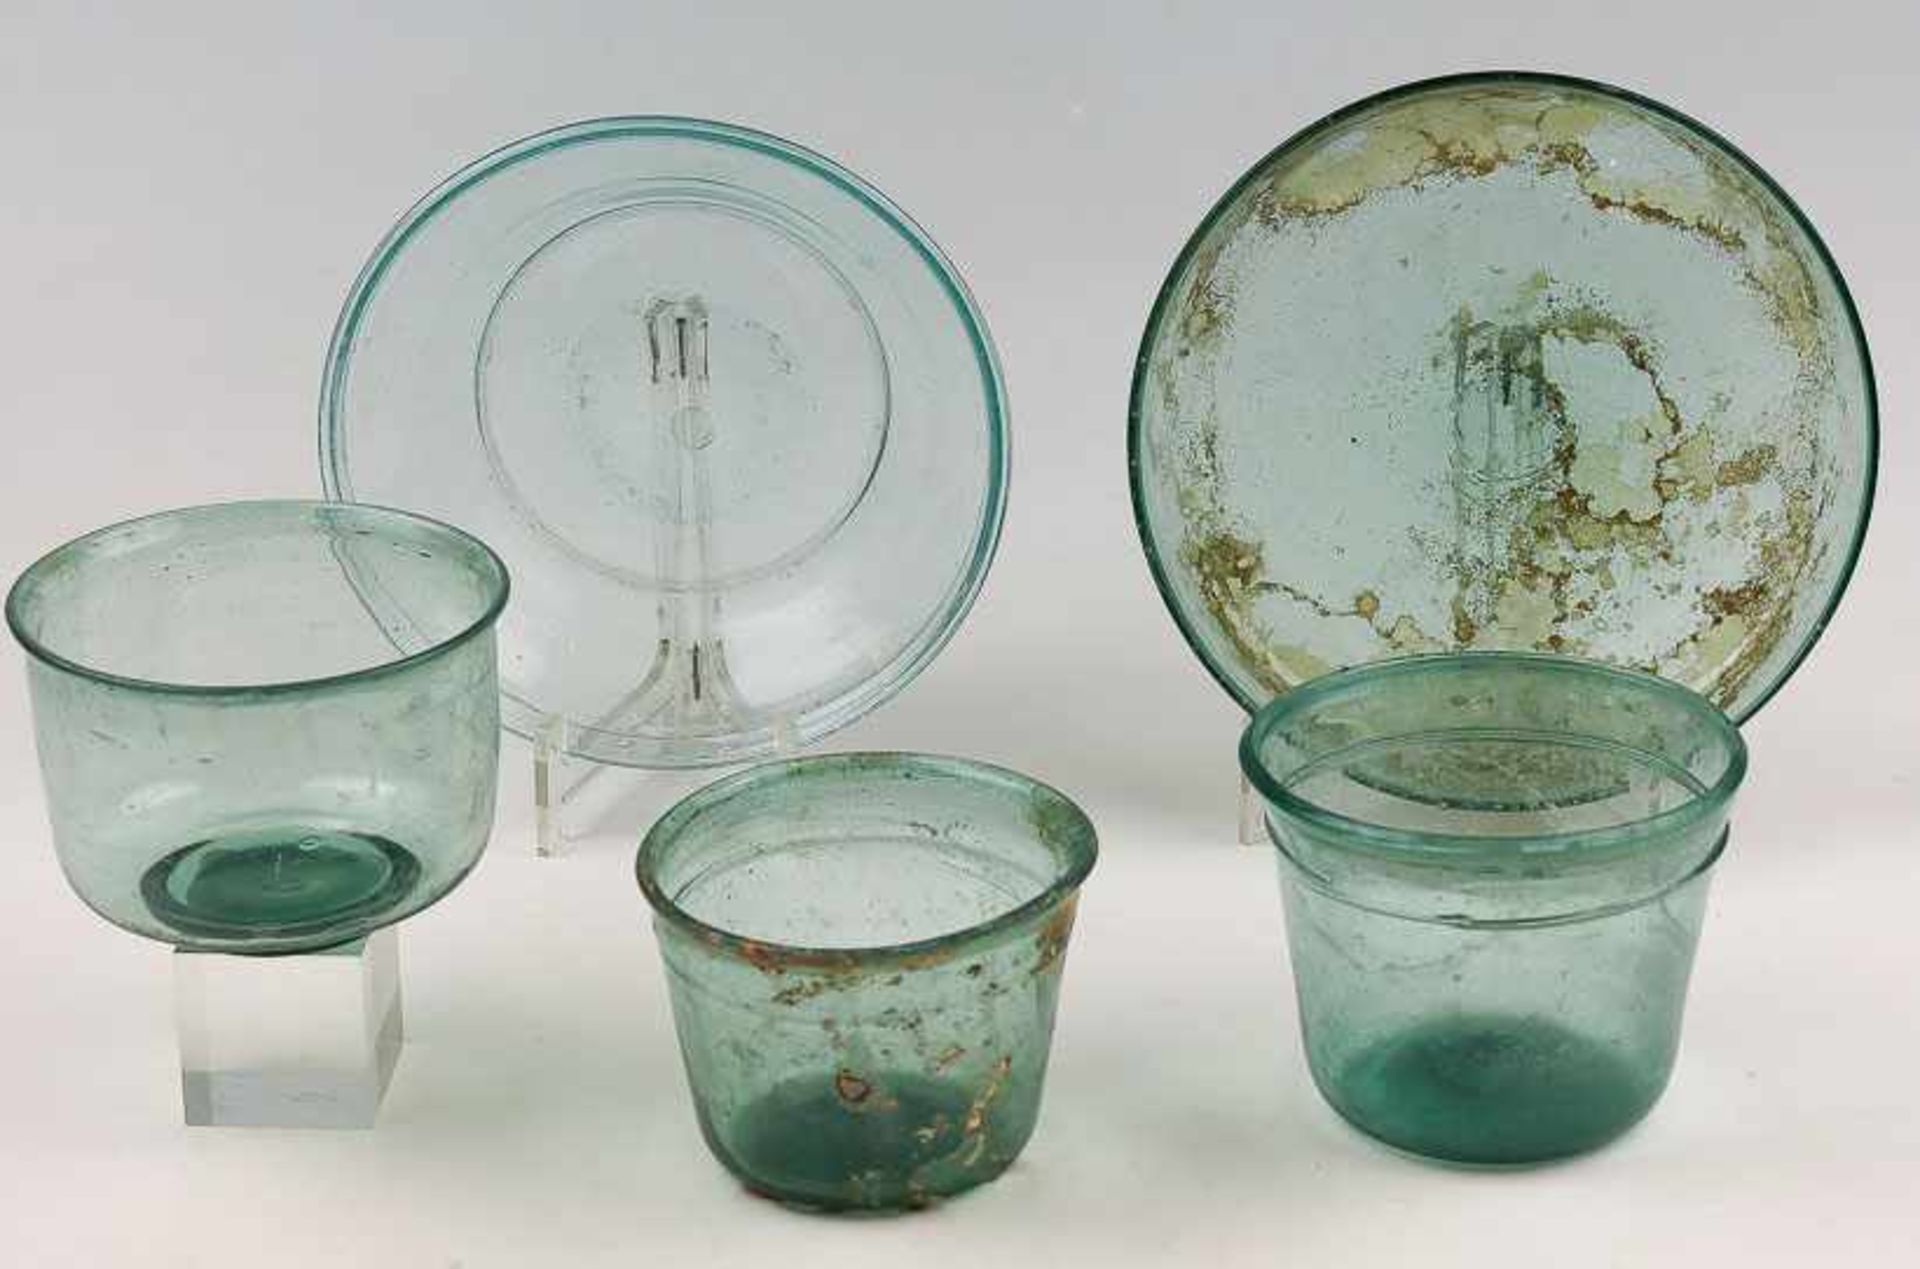 Fünf römische Glasgefäße. Blaugrünes Klarglas. Tlw. gering versintert. 3 Näpfe. Hohe, nach oben